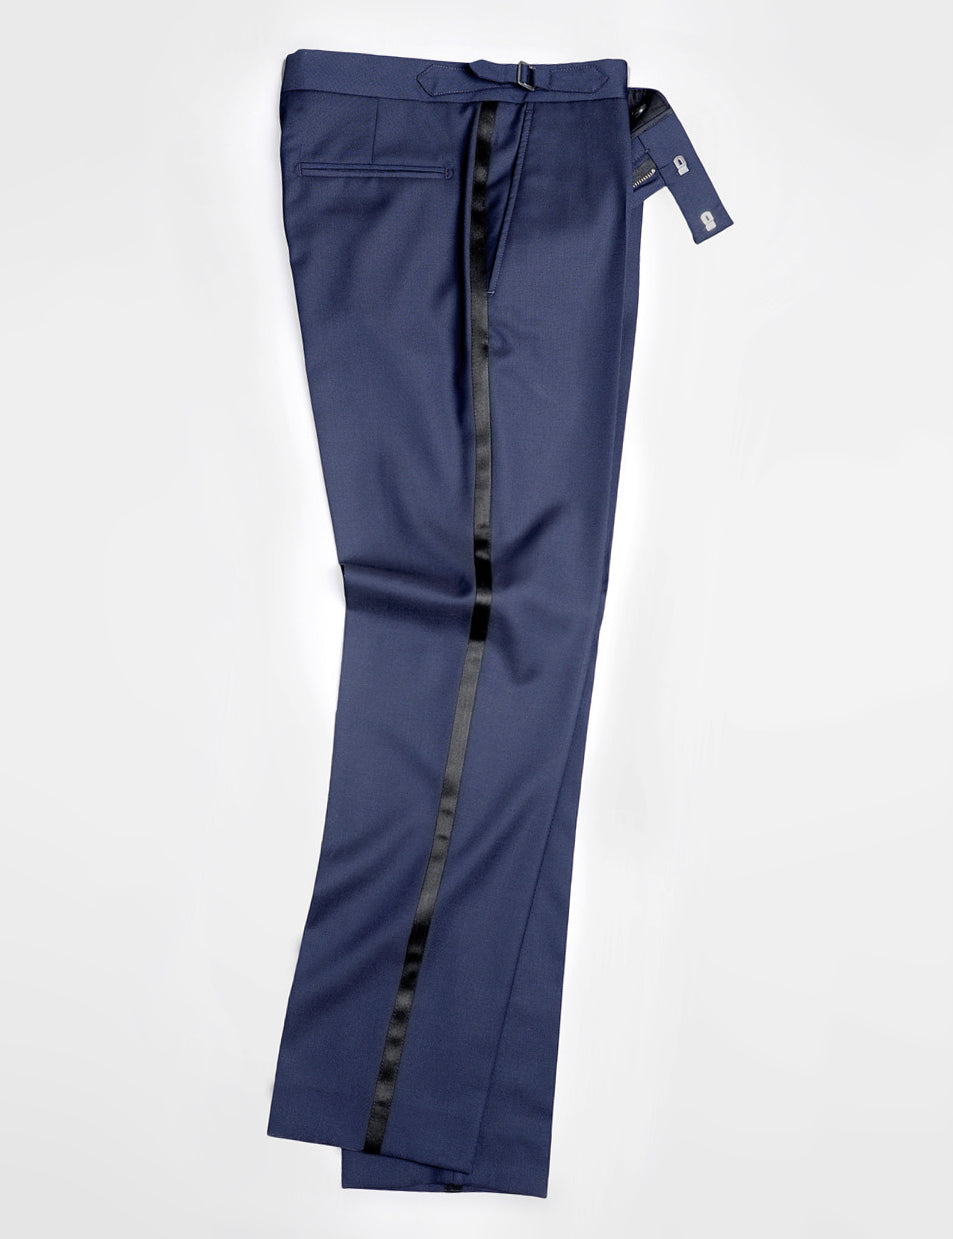 BKT50 Tuxedo Trouser in Super 110s - Navy with Satin Stripe – Brooklyn  Tailors